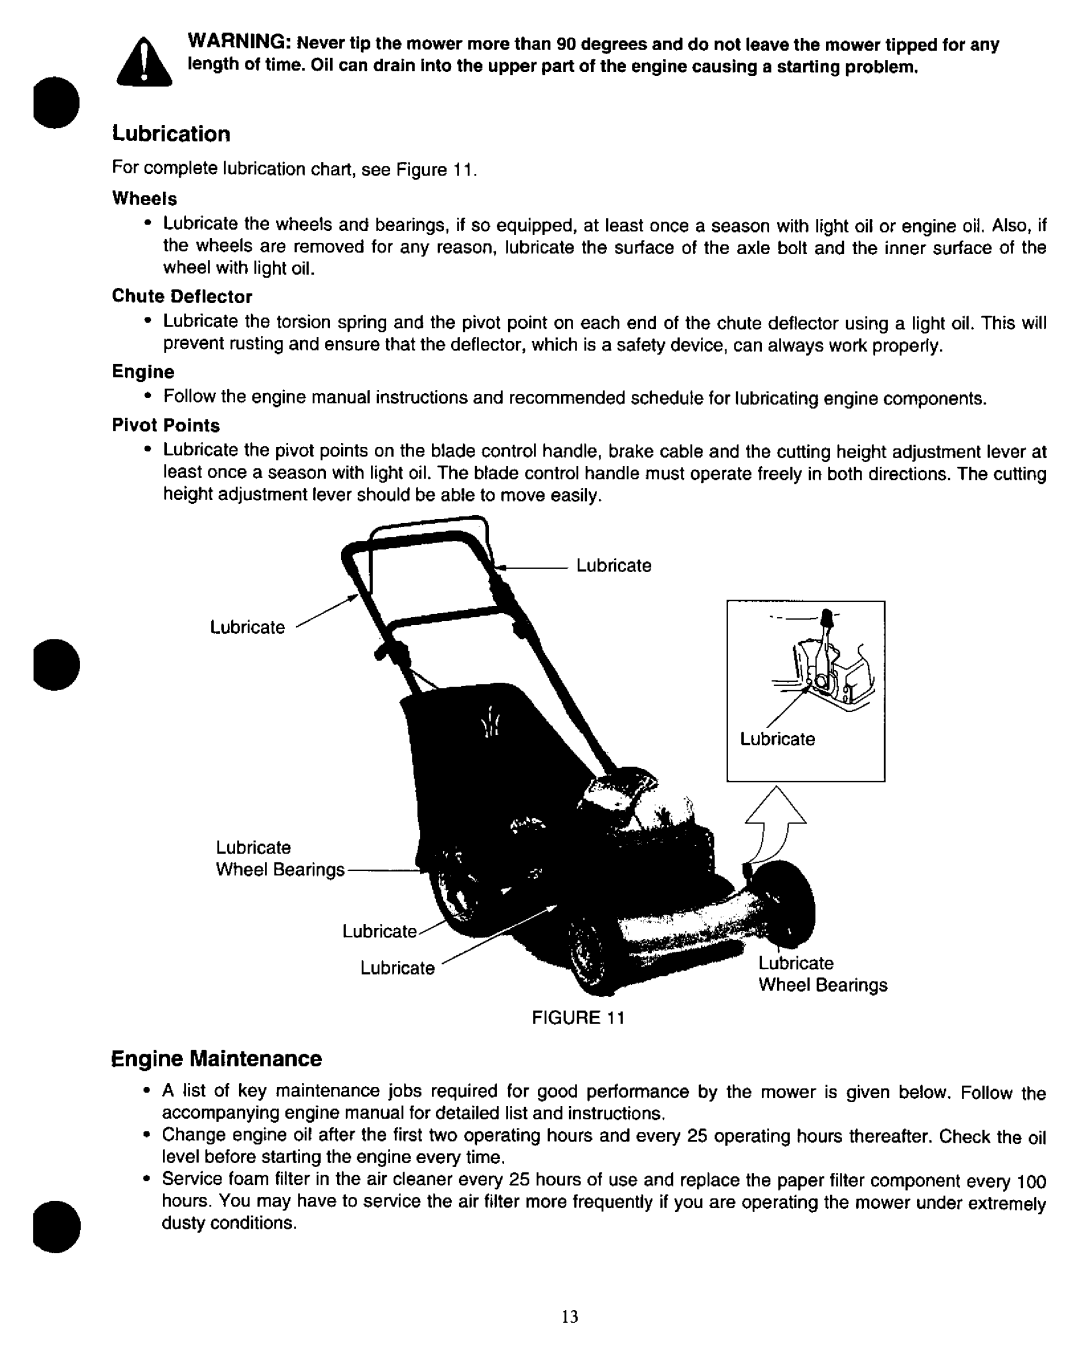 Yard-Man 11A-549C401 manual 